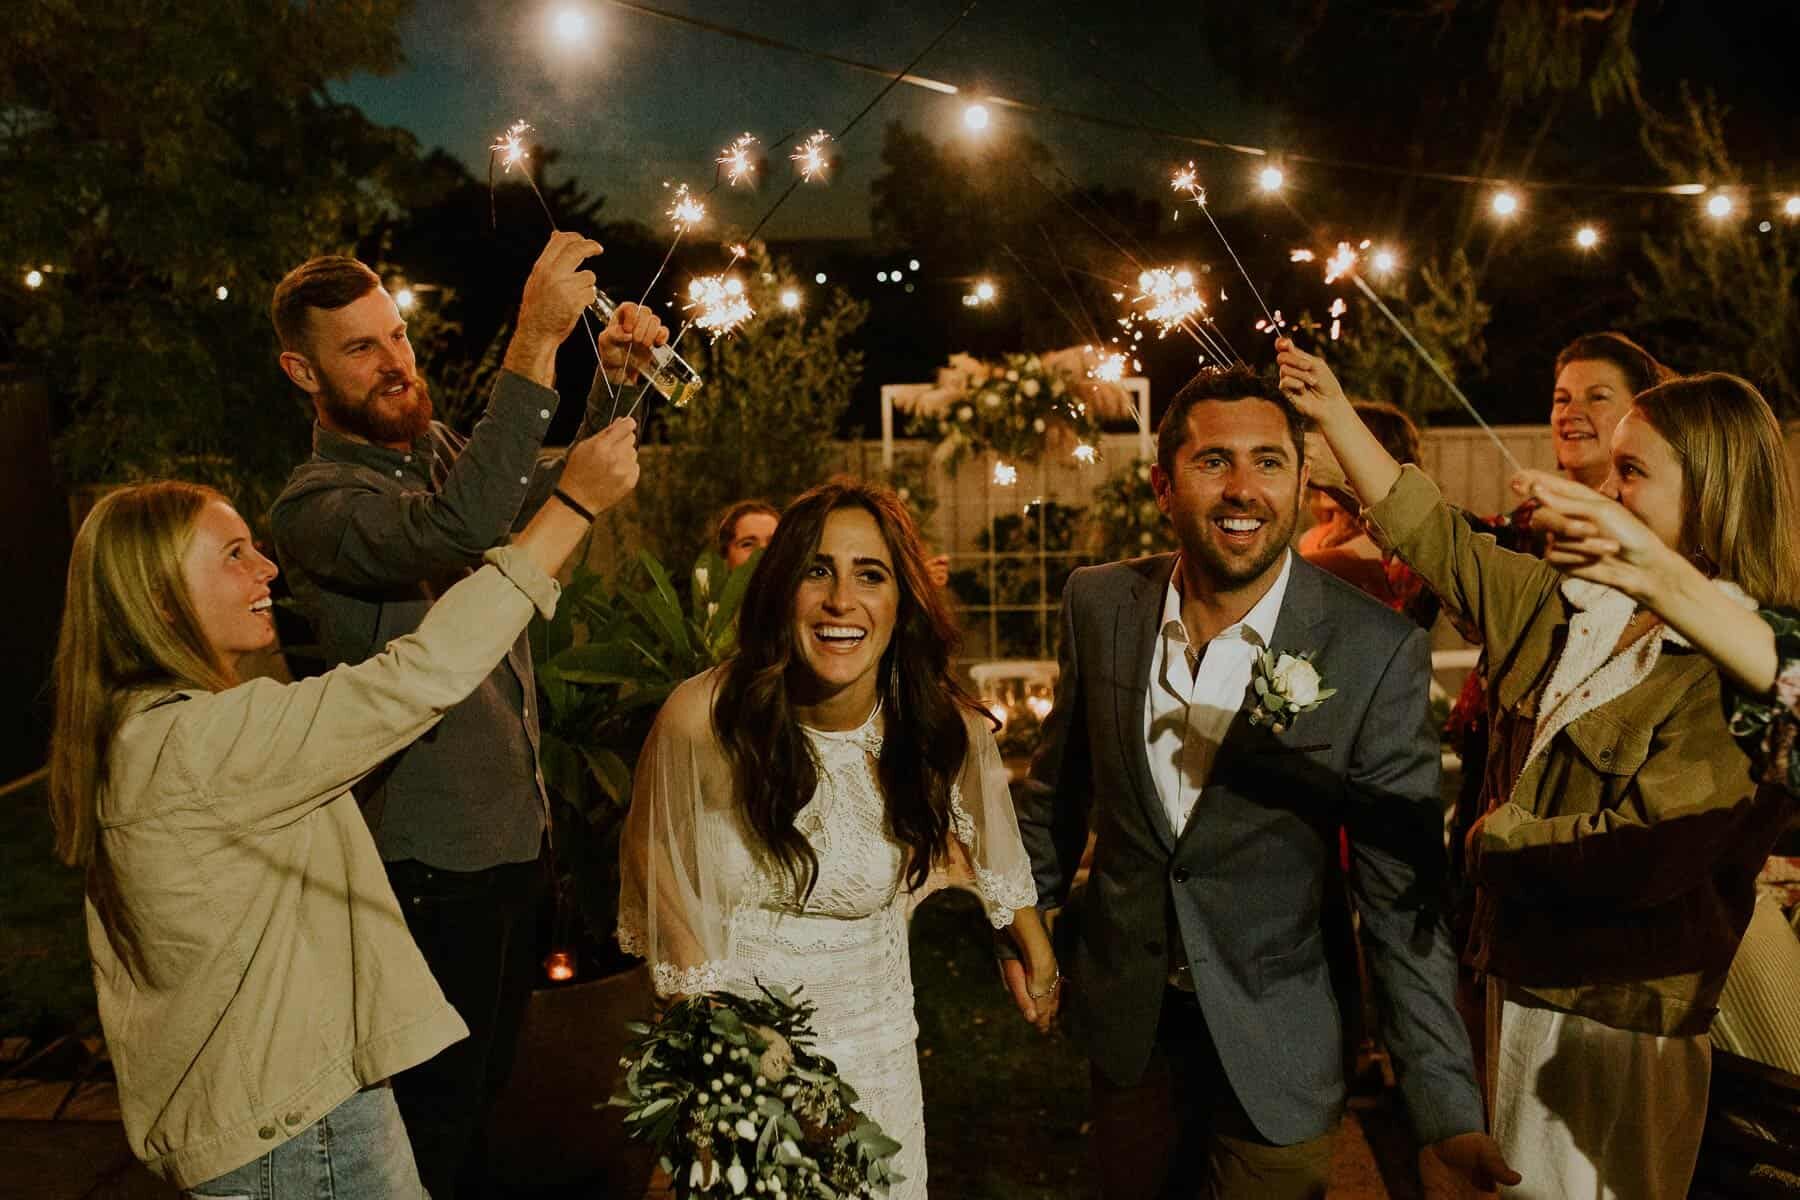 Chloe & Jim Tied the Knot in Their Own Backyard - Nouba Weddings ...